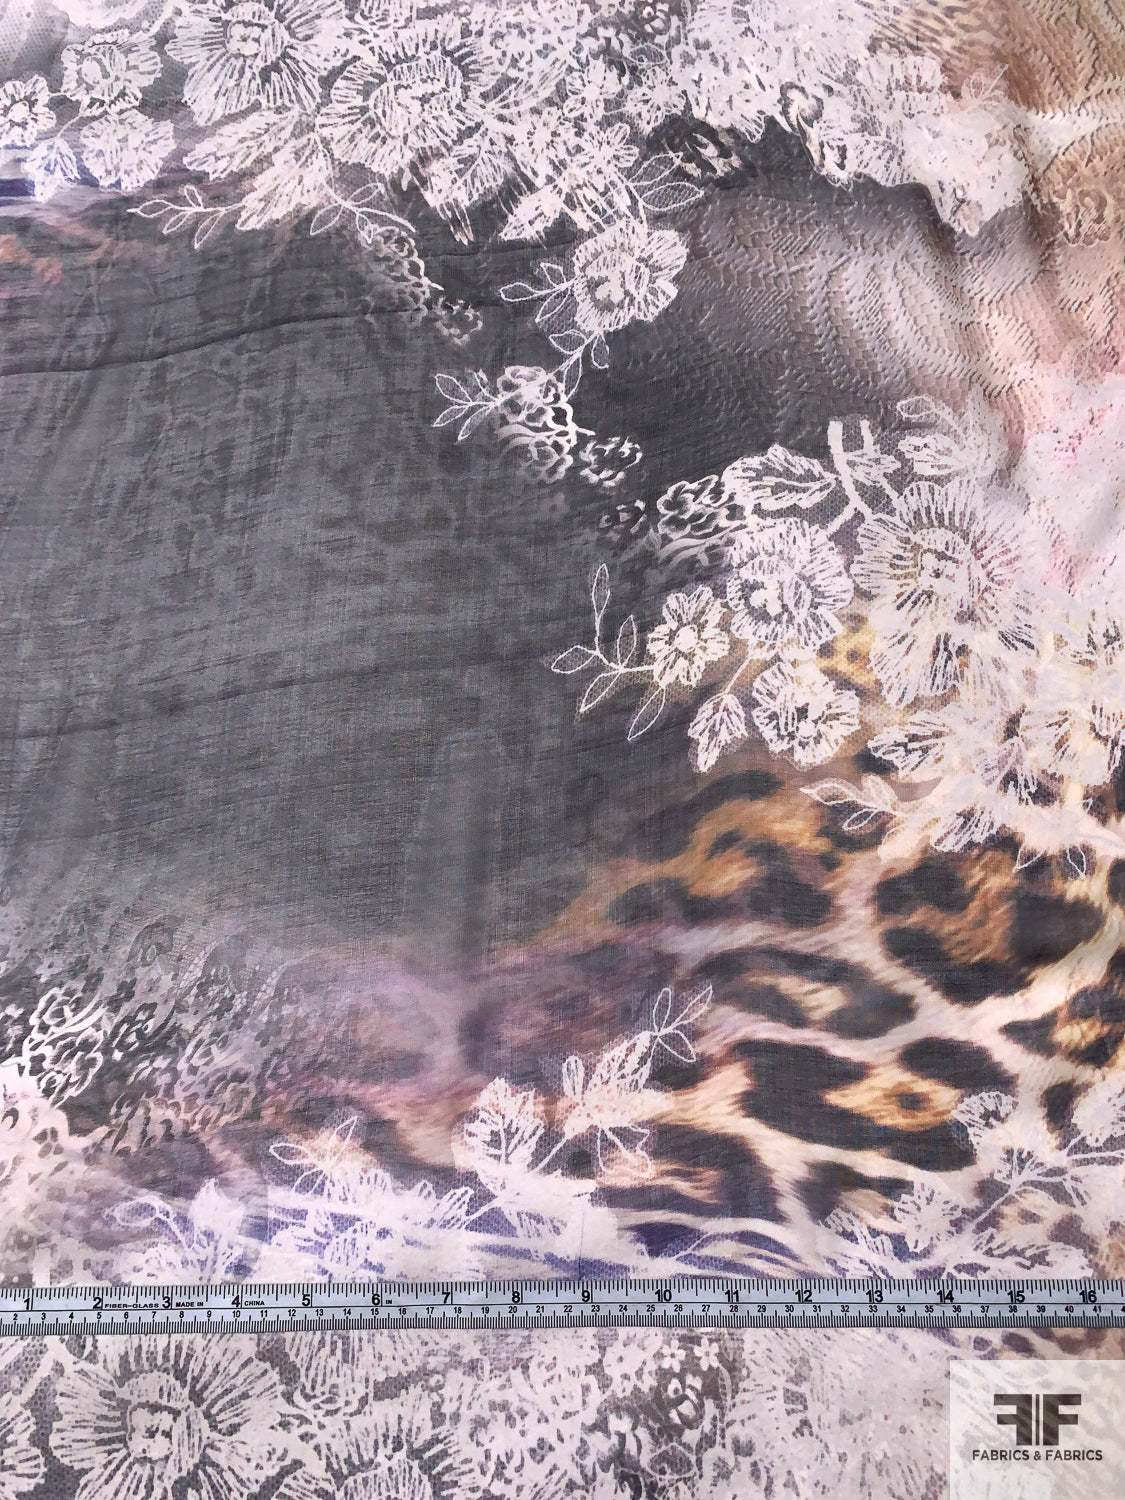 Lace Illusion Animal Pattern Printed Silk Chiffon - Earth Tones / Black / Browns